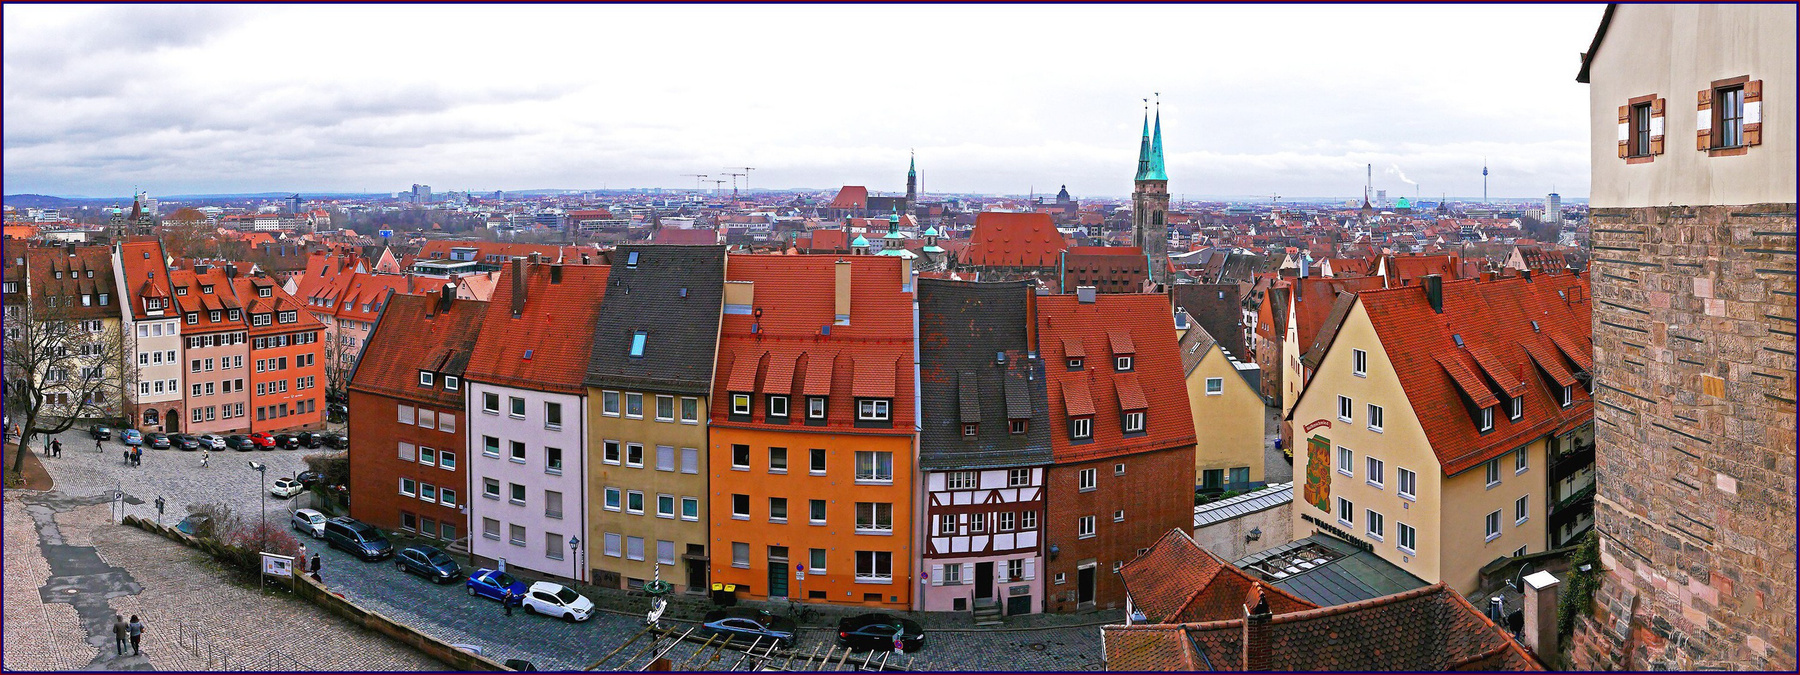 Панорама старого города Нюрнберг